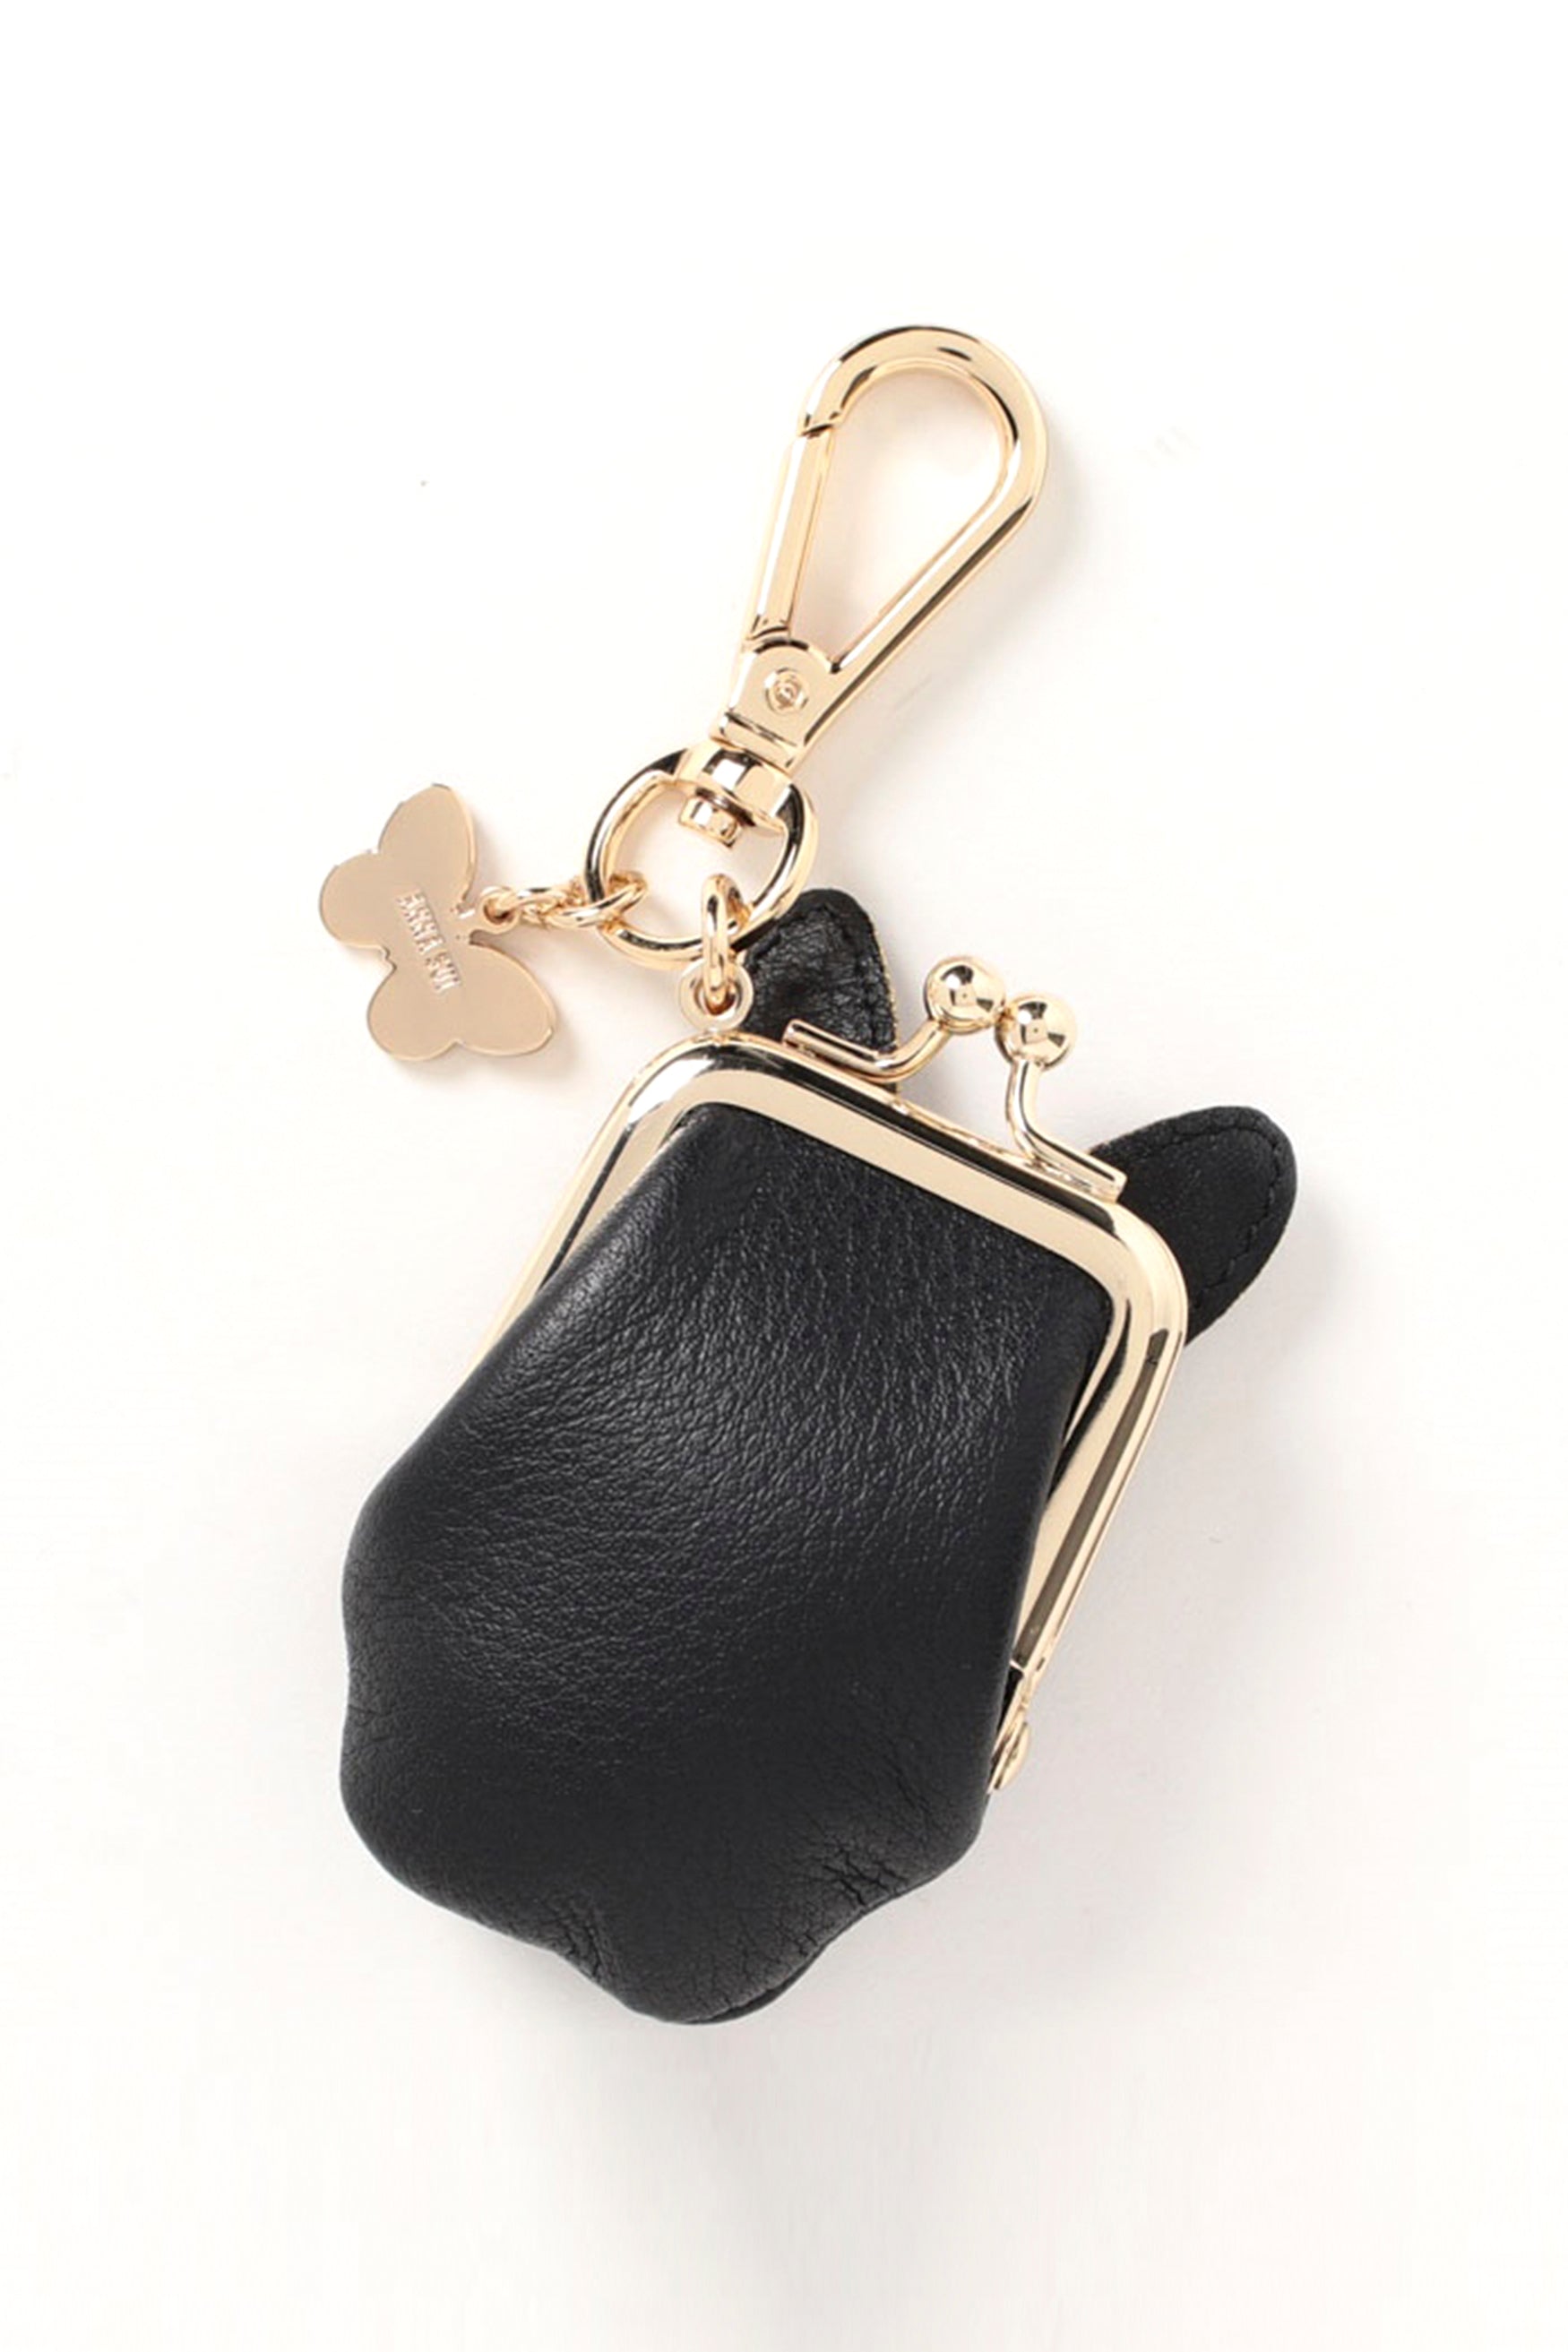 Louis Vuitton Pink Fur Rabbit Bag Charm Key Holder